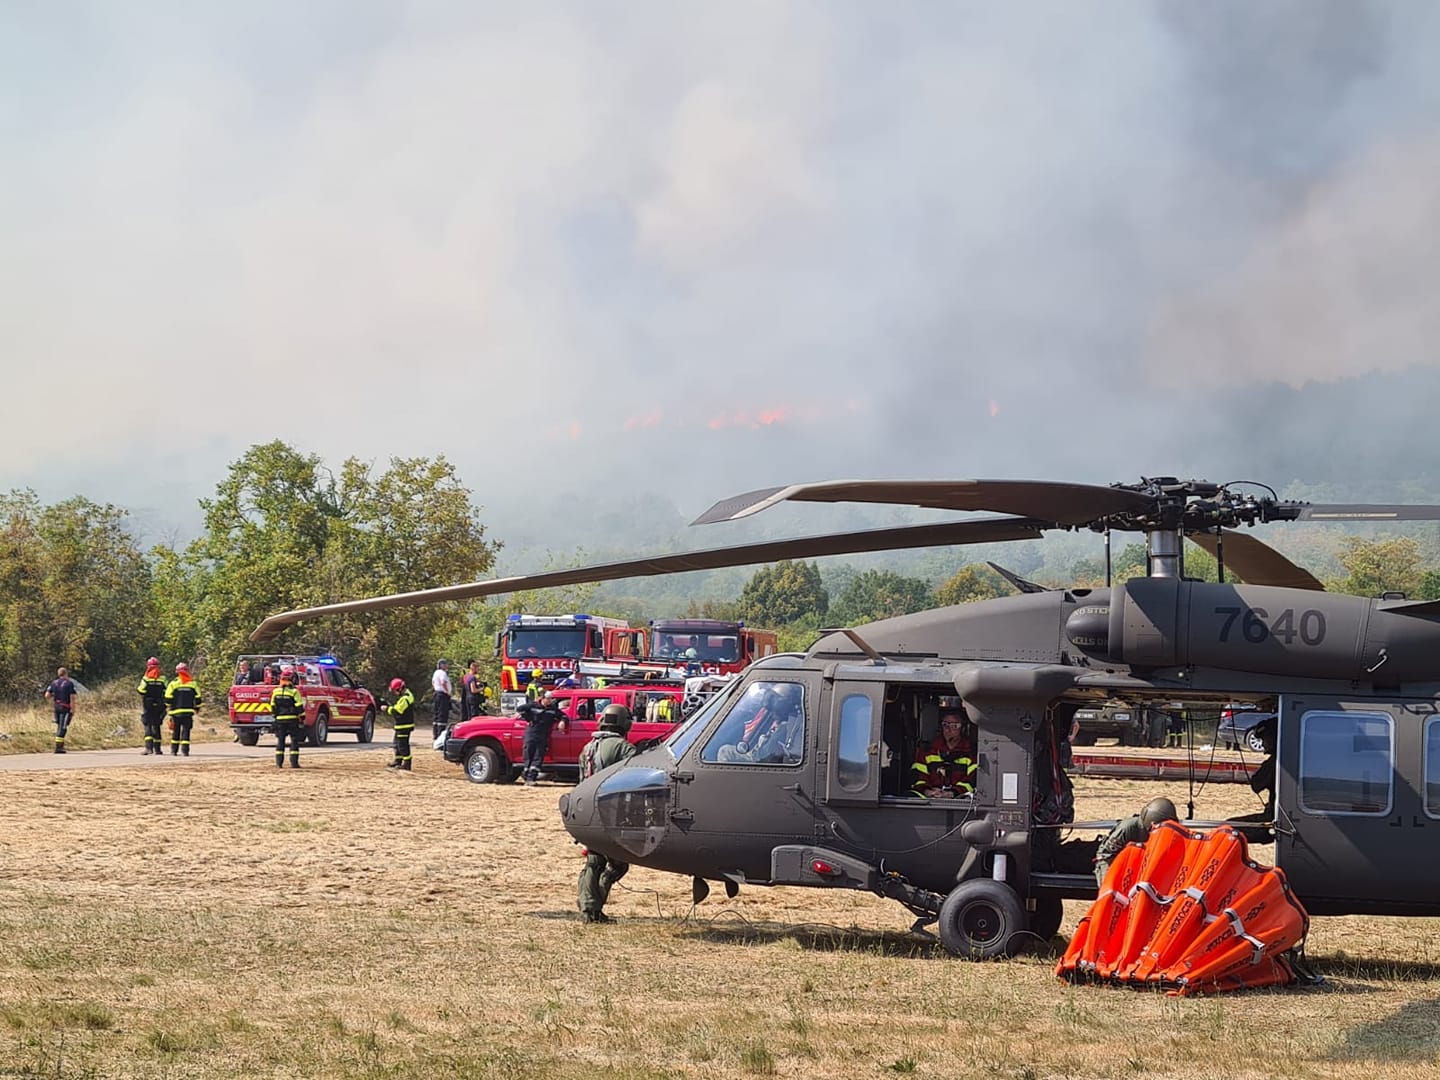 UH-60M Black Hawk při hašení požáru / Foto: Facebook.com @tydenikpolicie